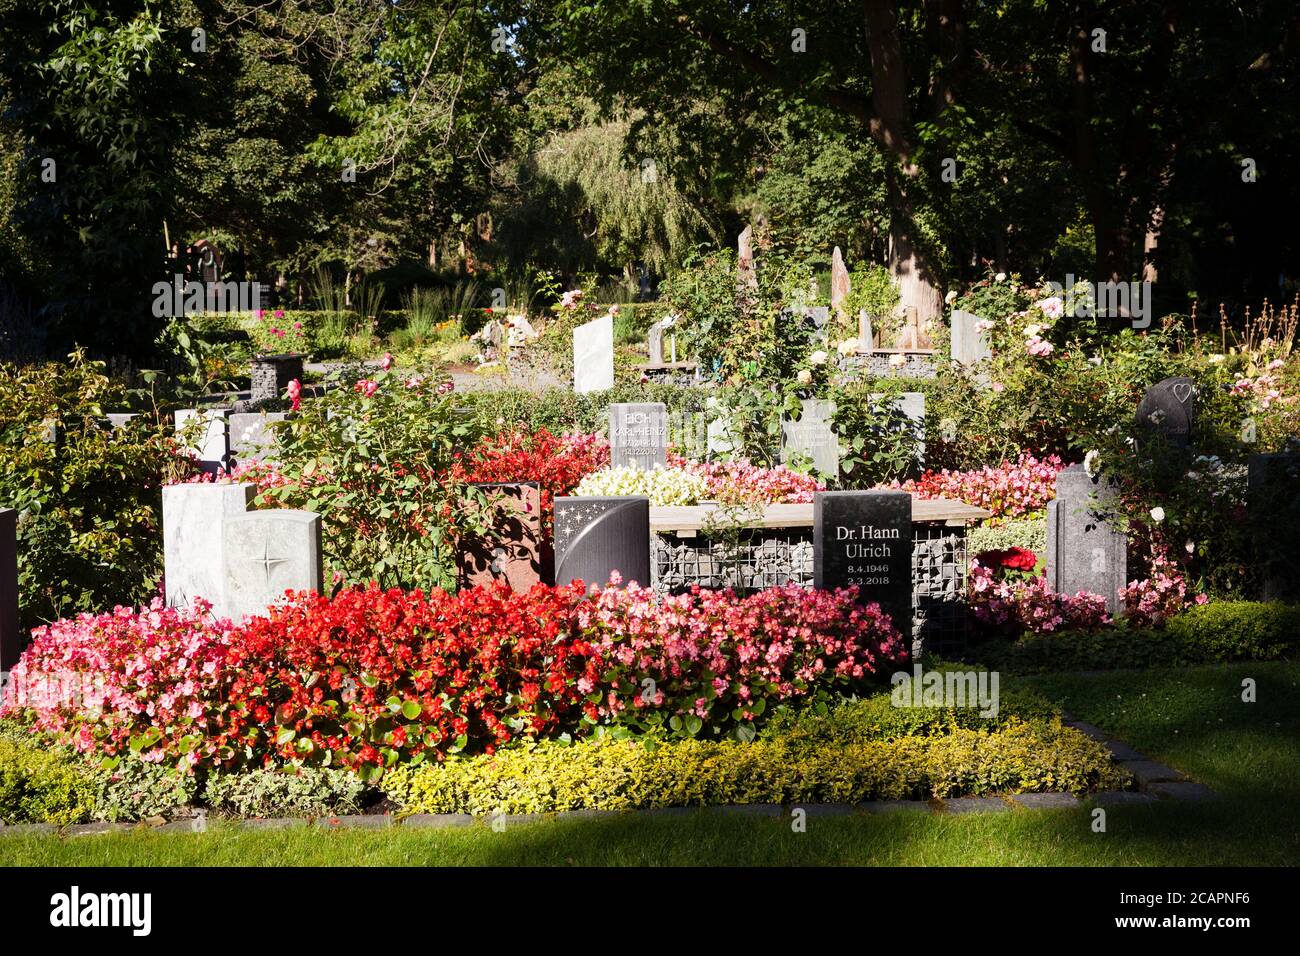 Tombe di urna sul cimitero di Melaten, Colonia, Germania. Urnincreeber auf dem Melatenfriedhof, Koeln, Deutschland. Foto Stock